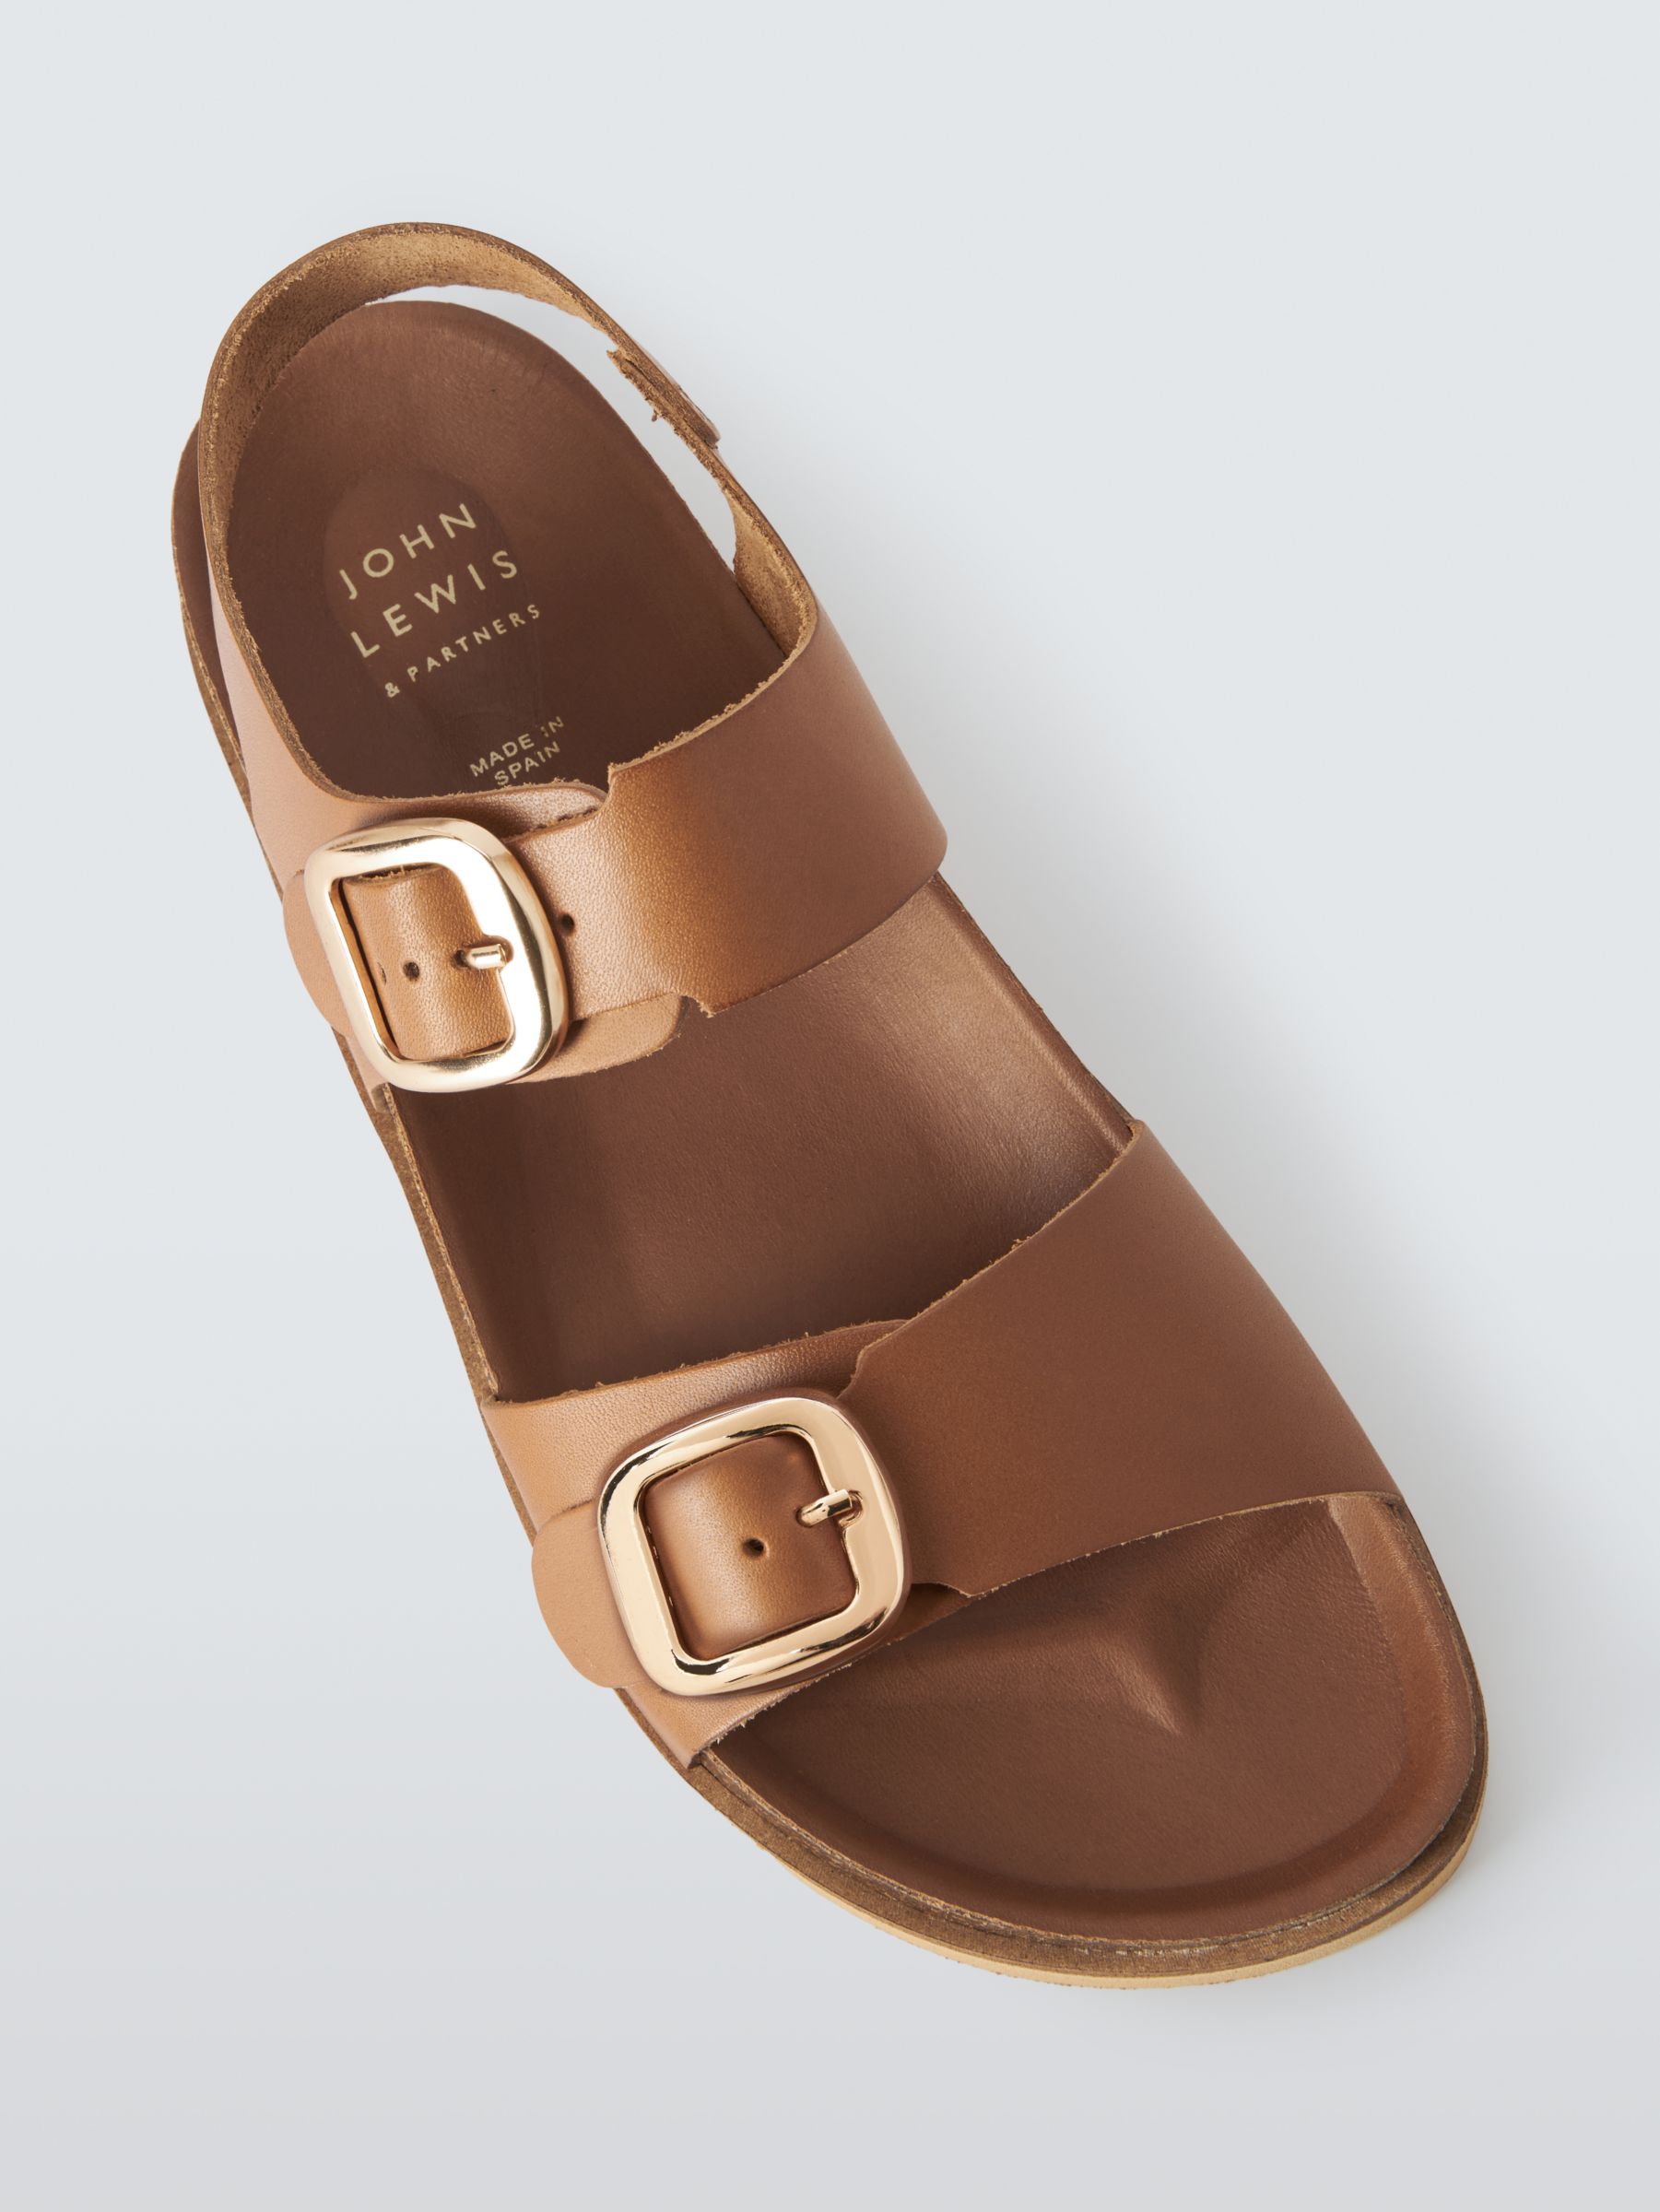 John Lewis Louisianna Leather Slingback Footbed Sandals, Tan, 3